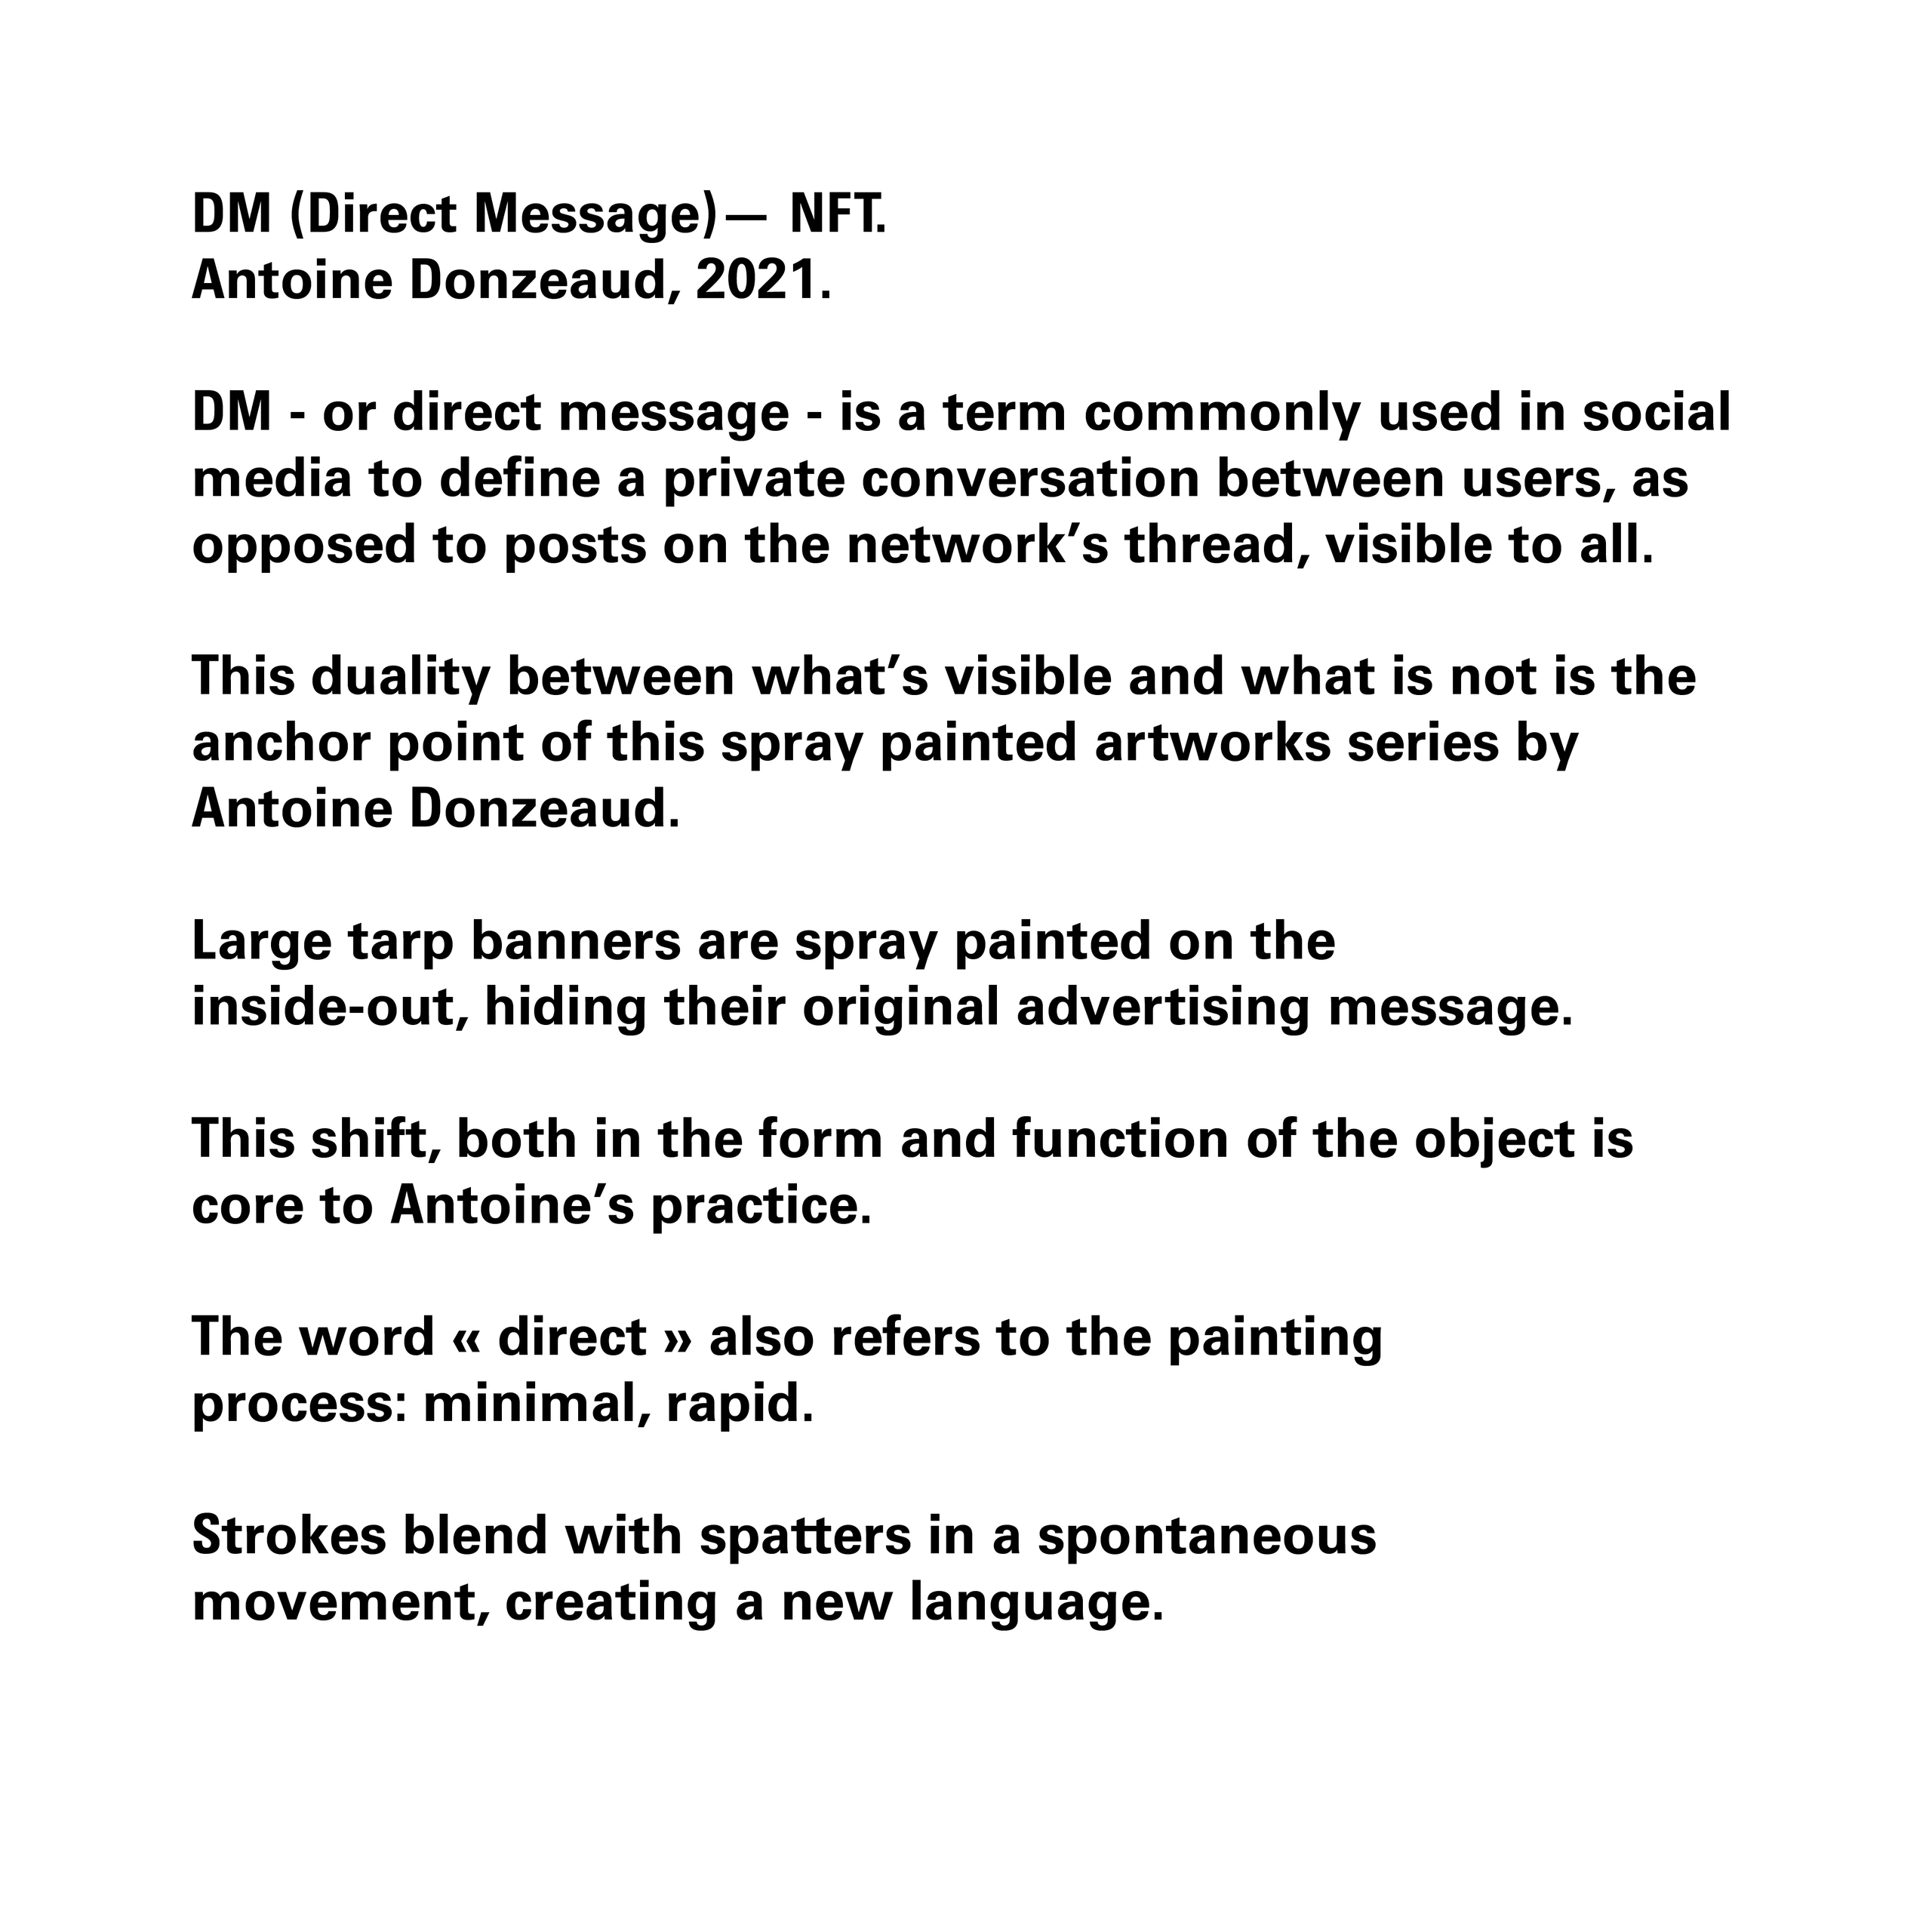 DM (Direct Message) — NFT by Antoine Donzeaud